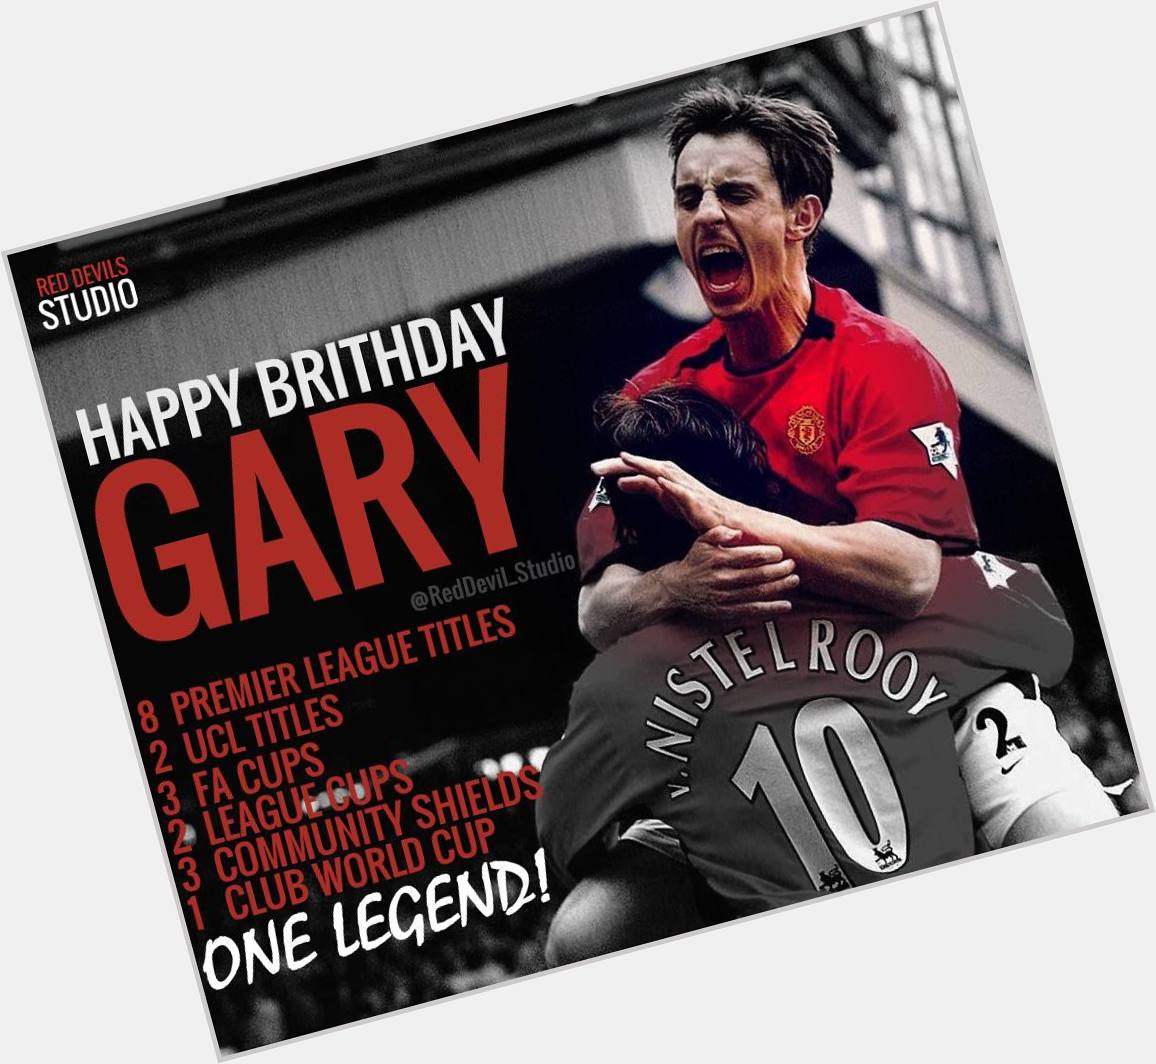 Happy birthday to legend Gary Neville! Many happy returns of the day! 